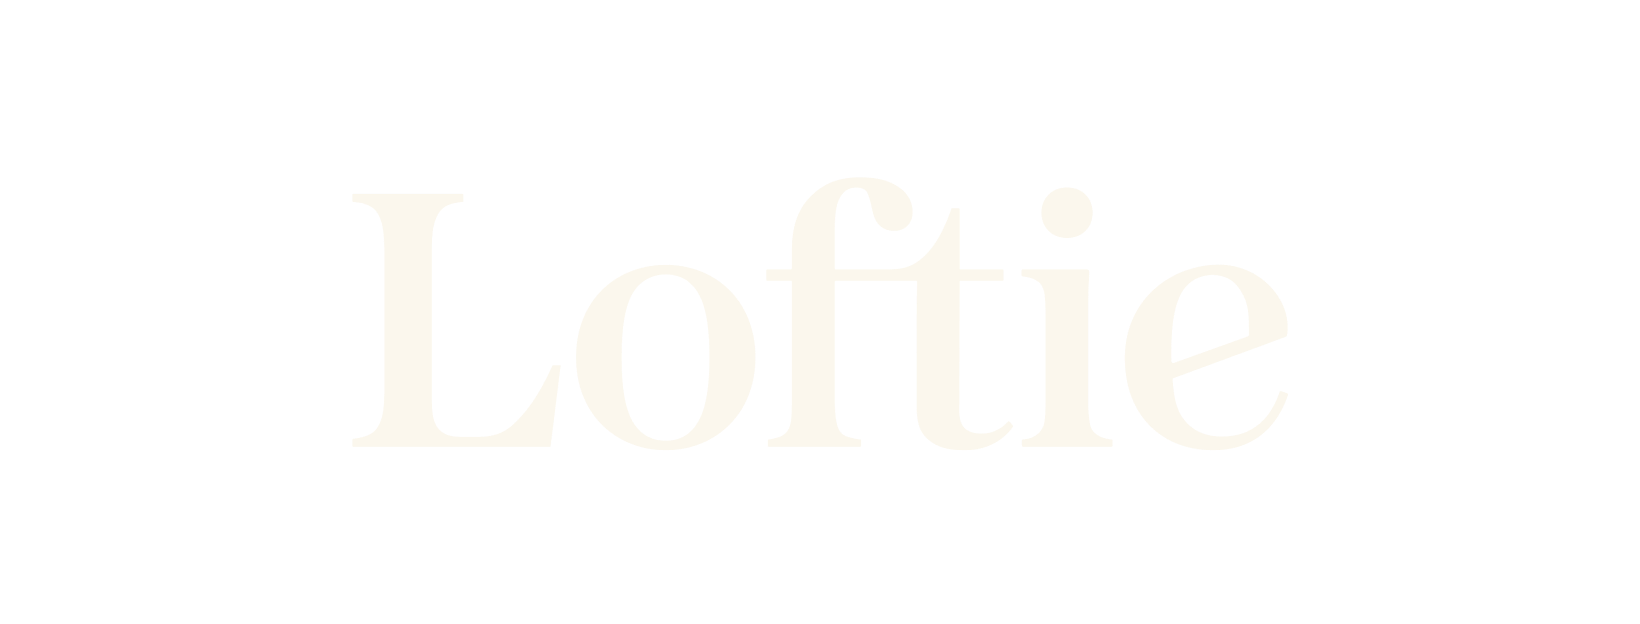 Loftie Support  logo